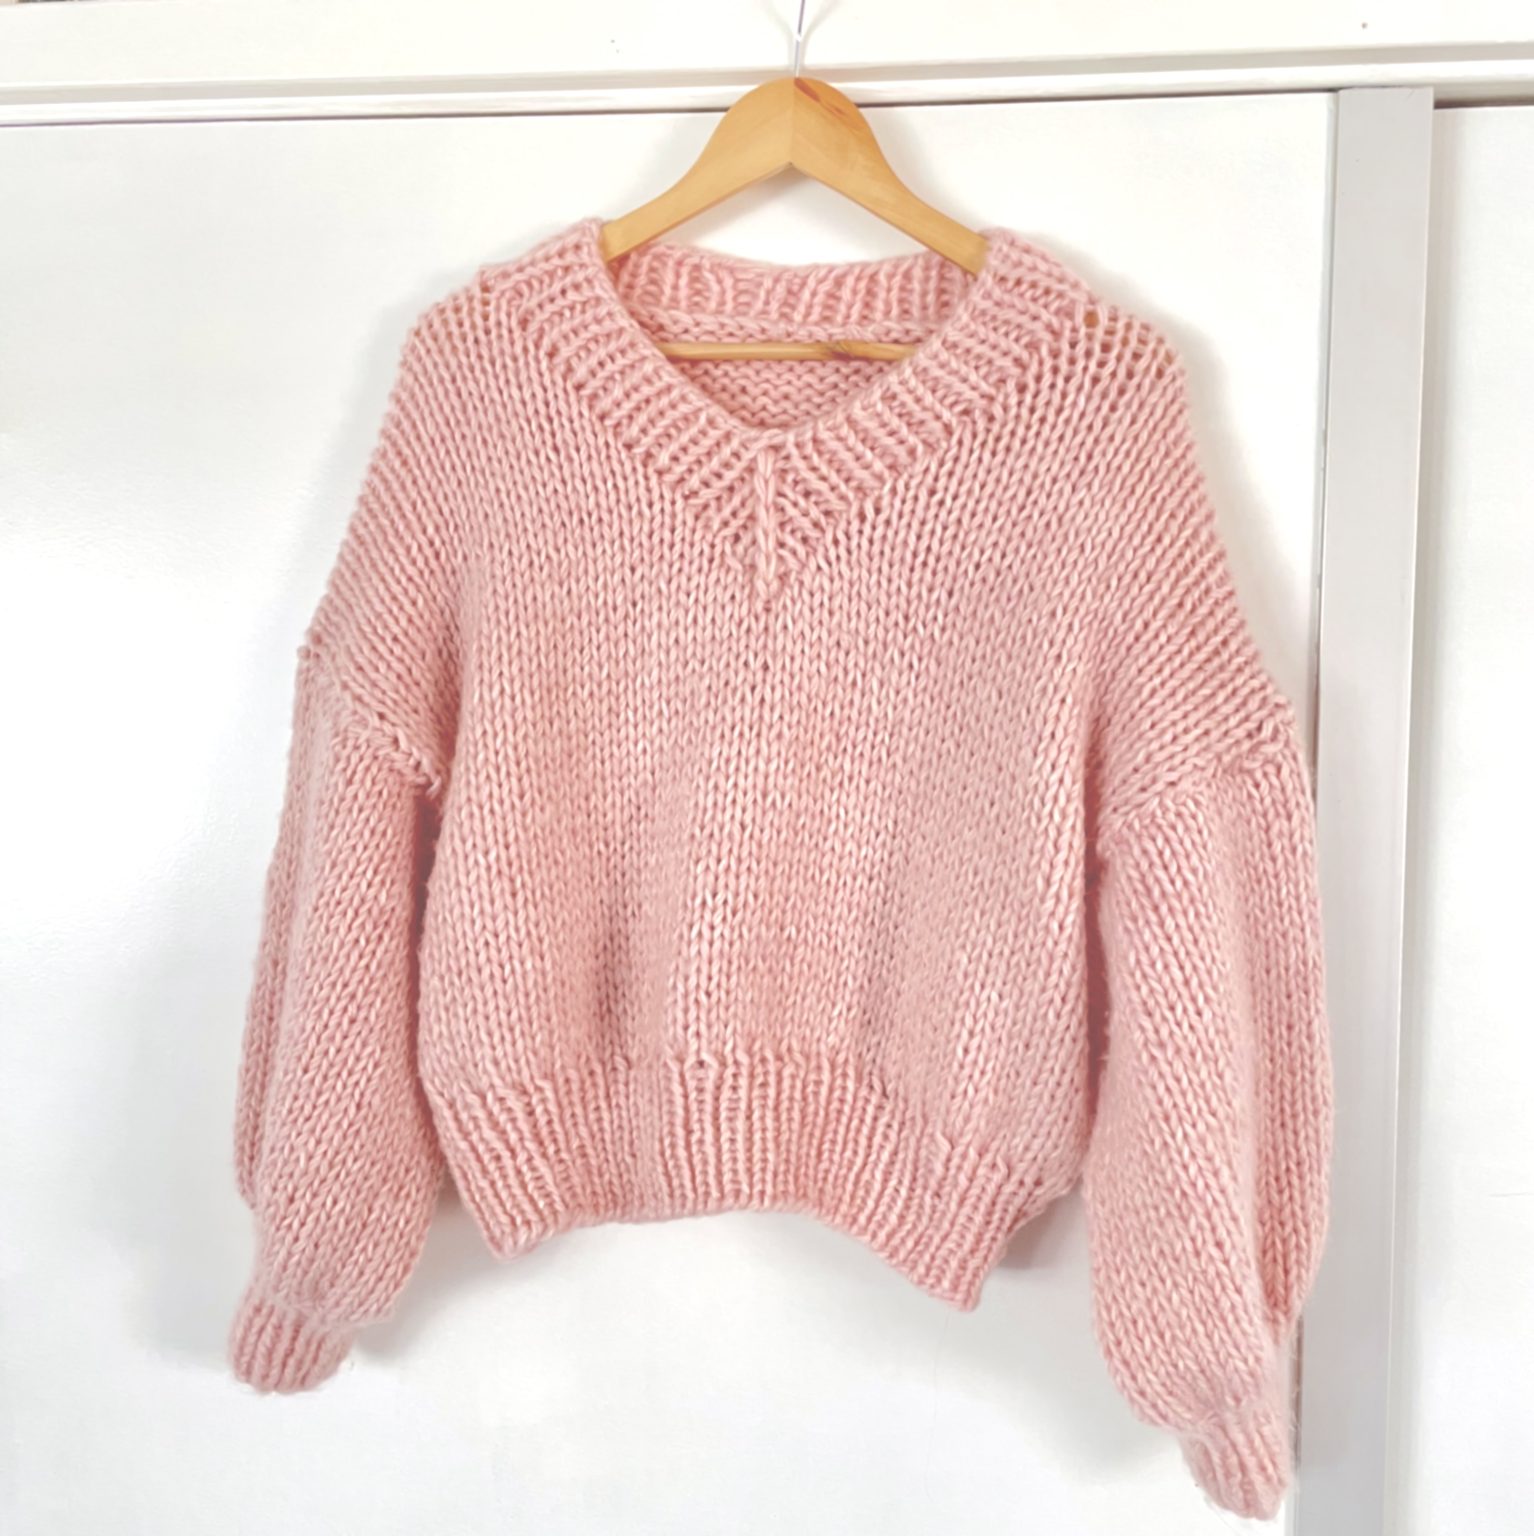 Outlander shawl – Frisian knitting